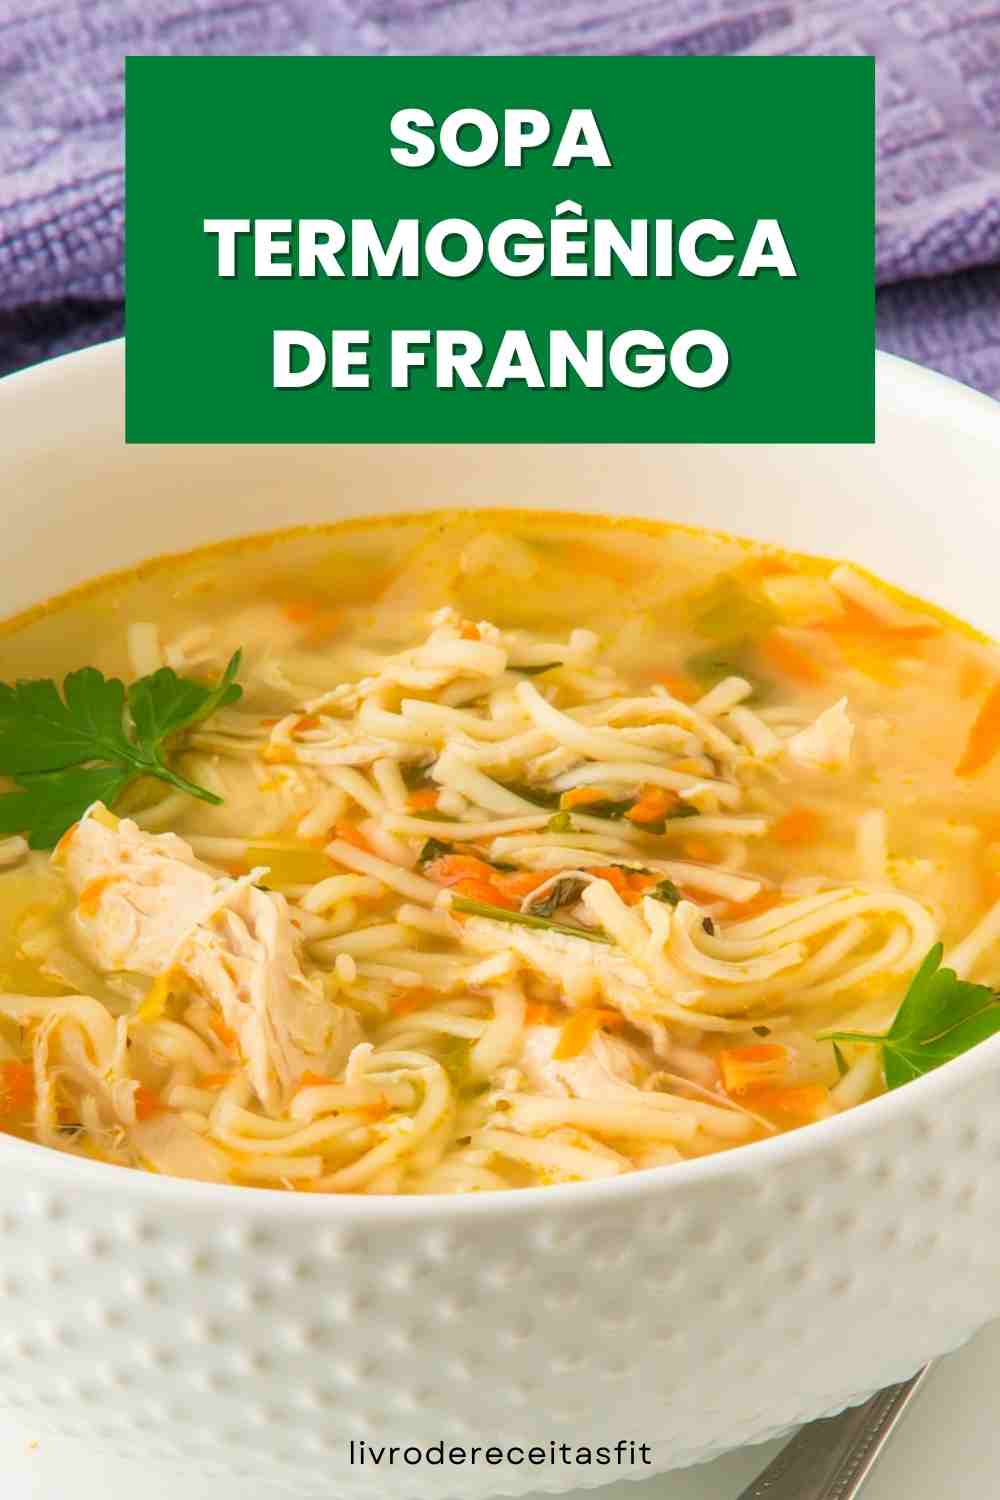 You are currently viewing Receita de Sopa Termogênica de Frango